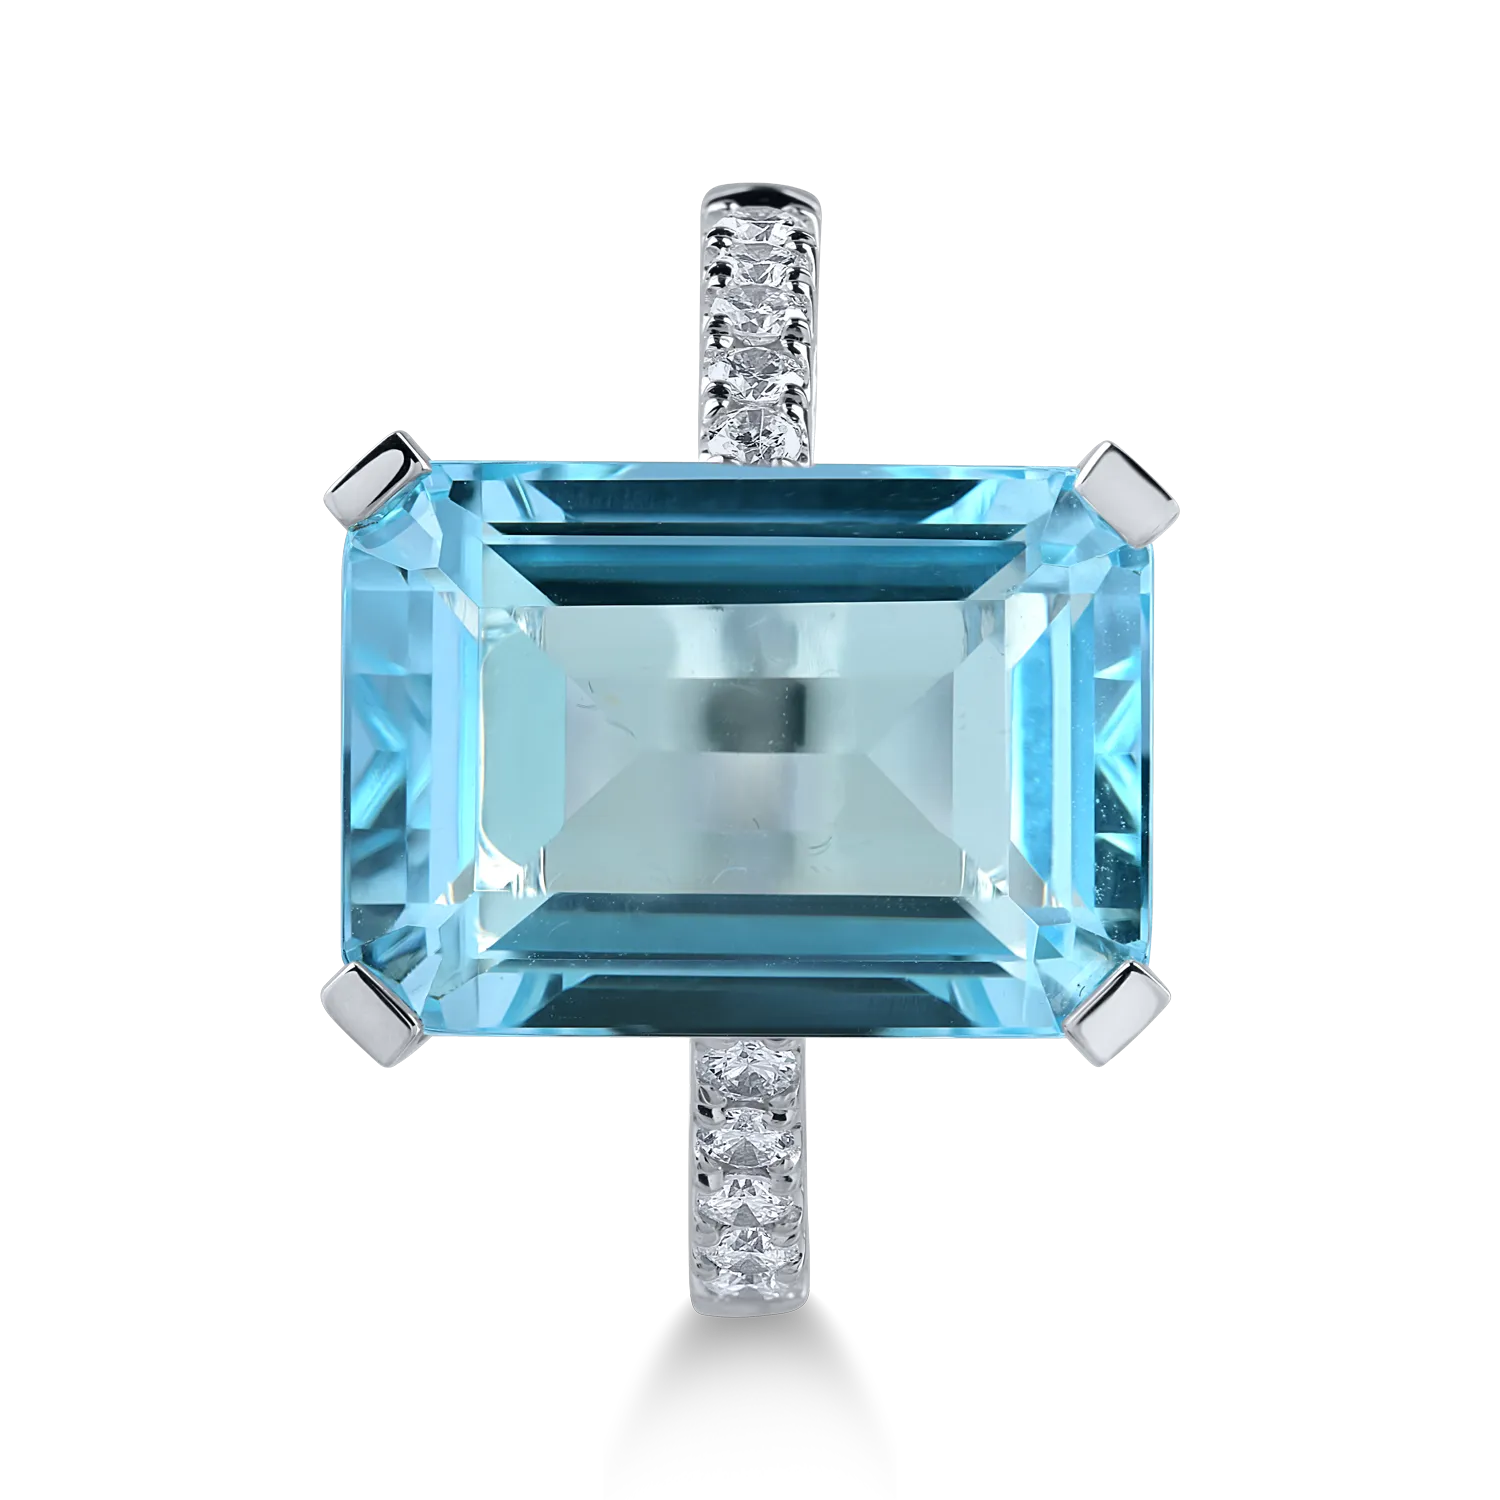 Inel din aur alb cu topaz albastru-deschis de 13.5ct si diamante de 0.22ct